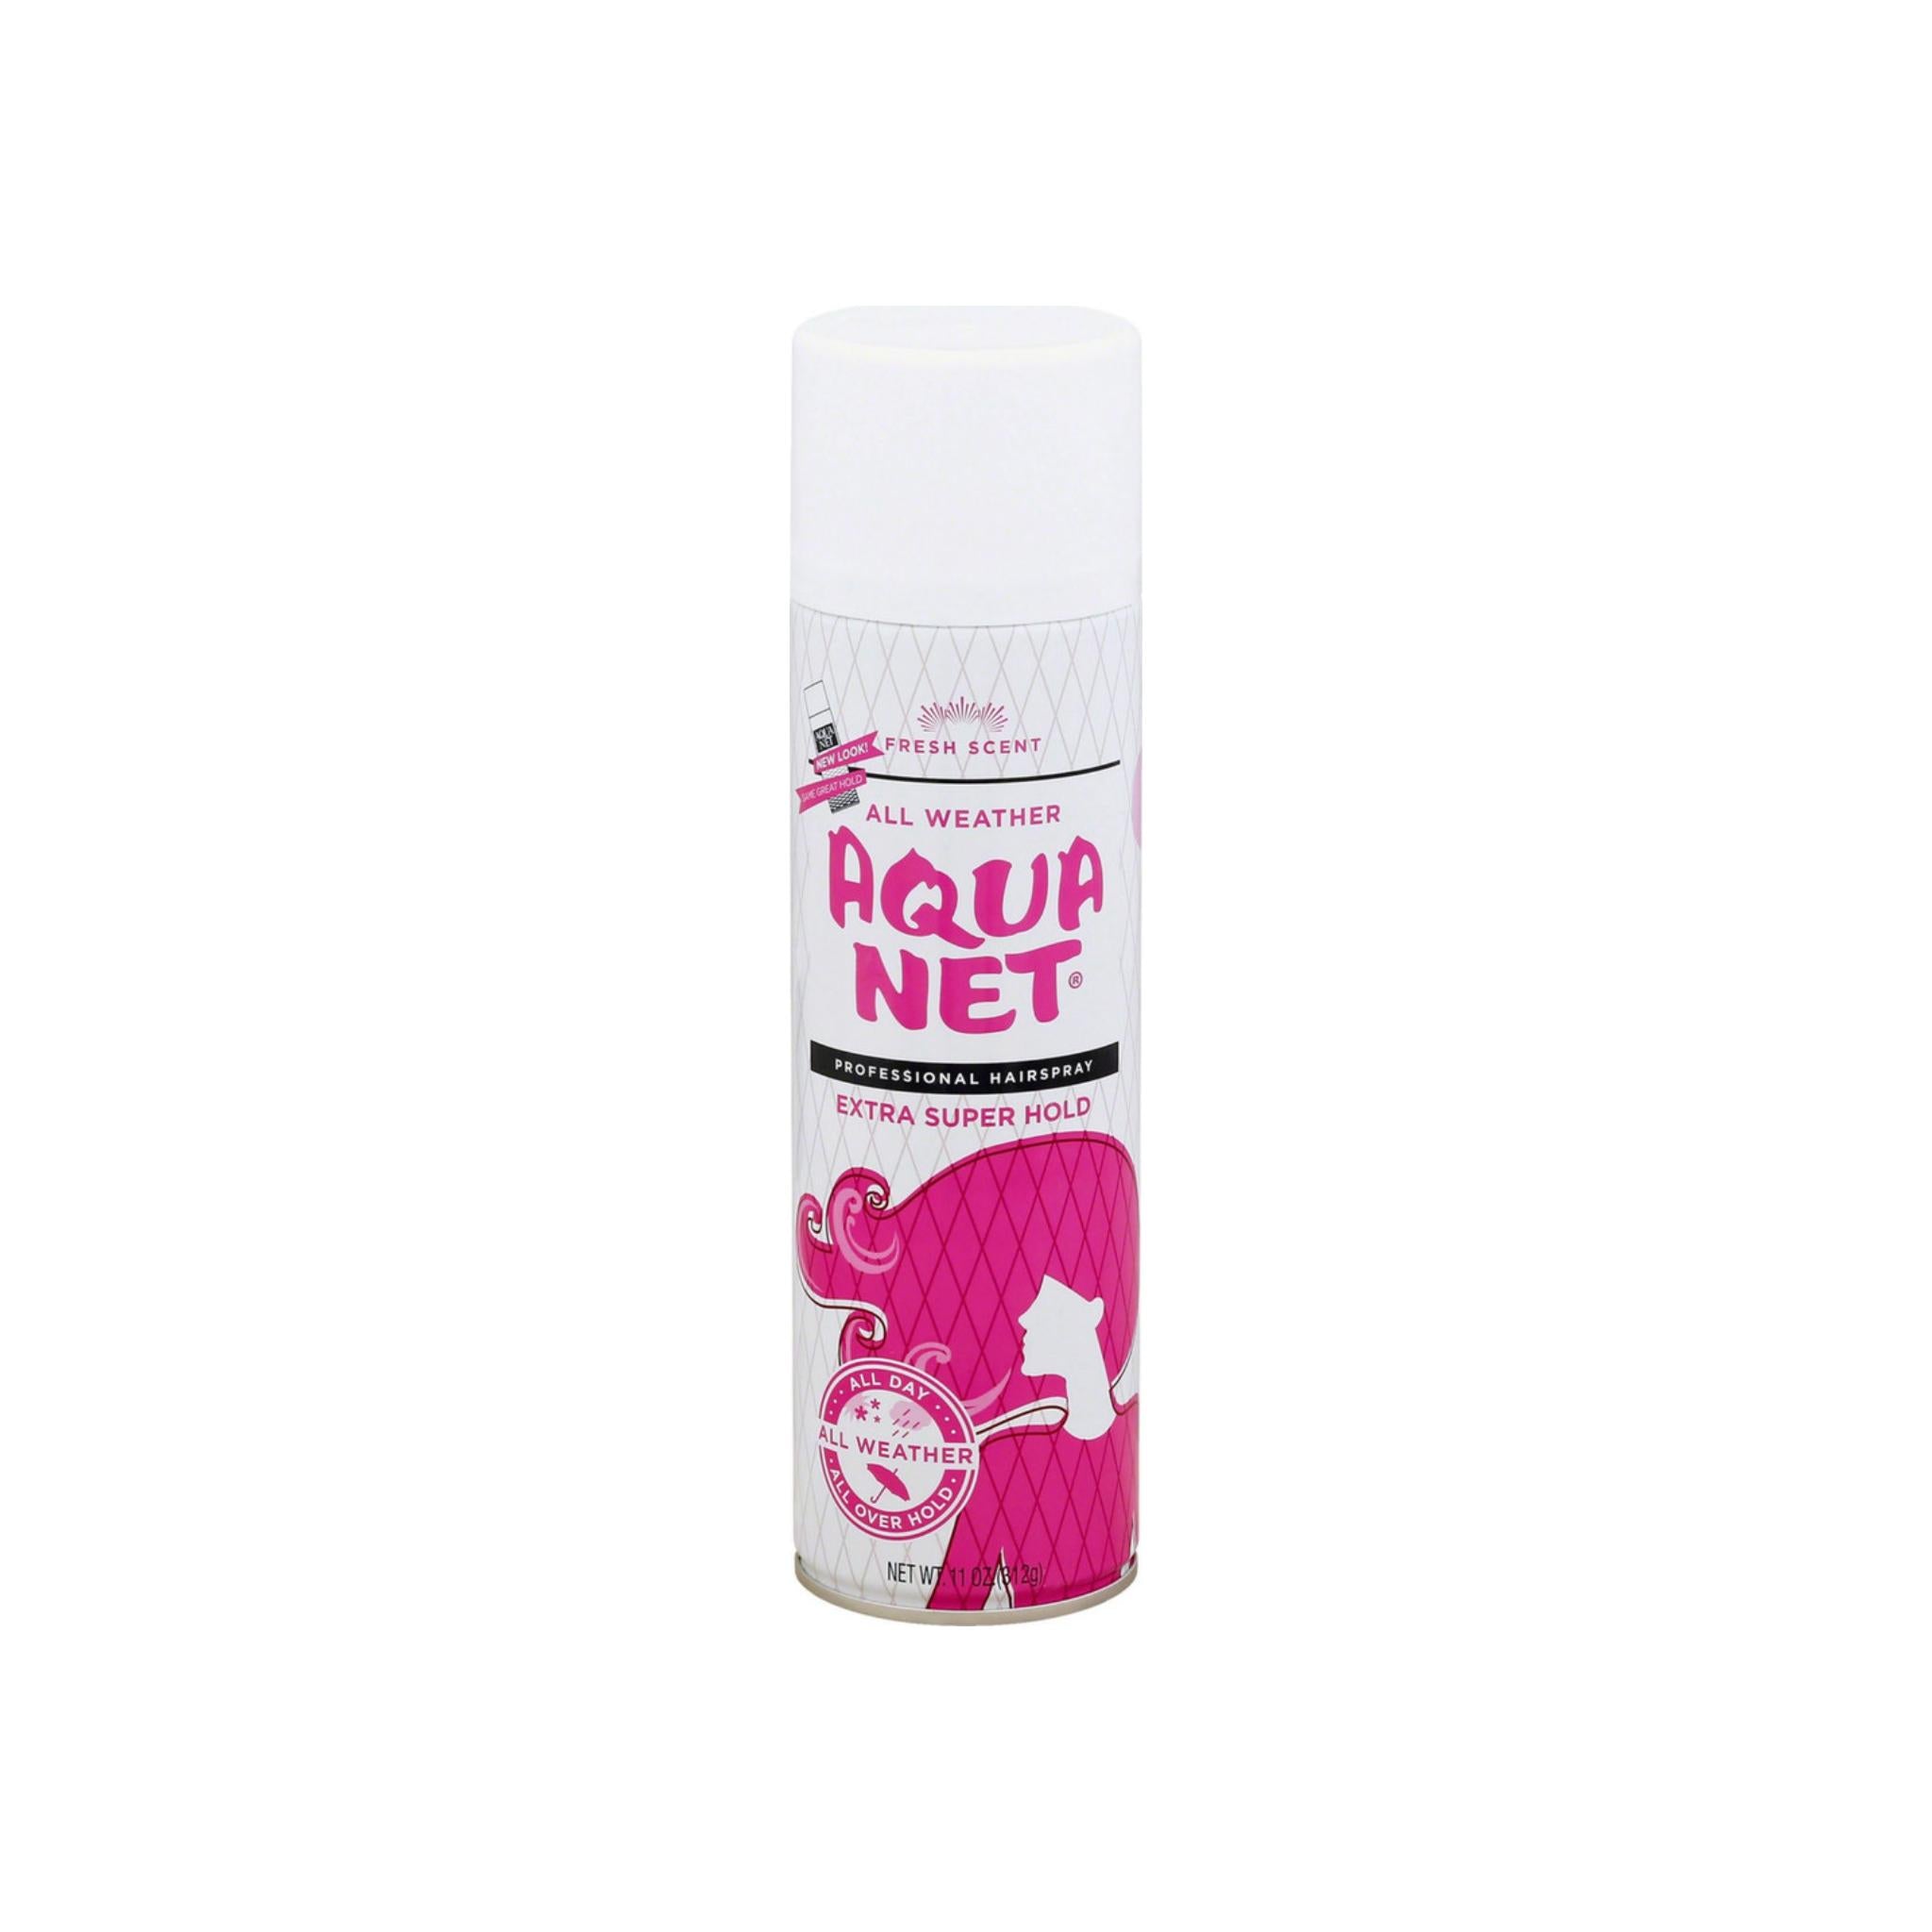 Aqua Net Professional Hair Spray Extra Super Hold Fresh Scent 11 Oz Pharmapacks